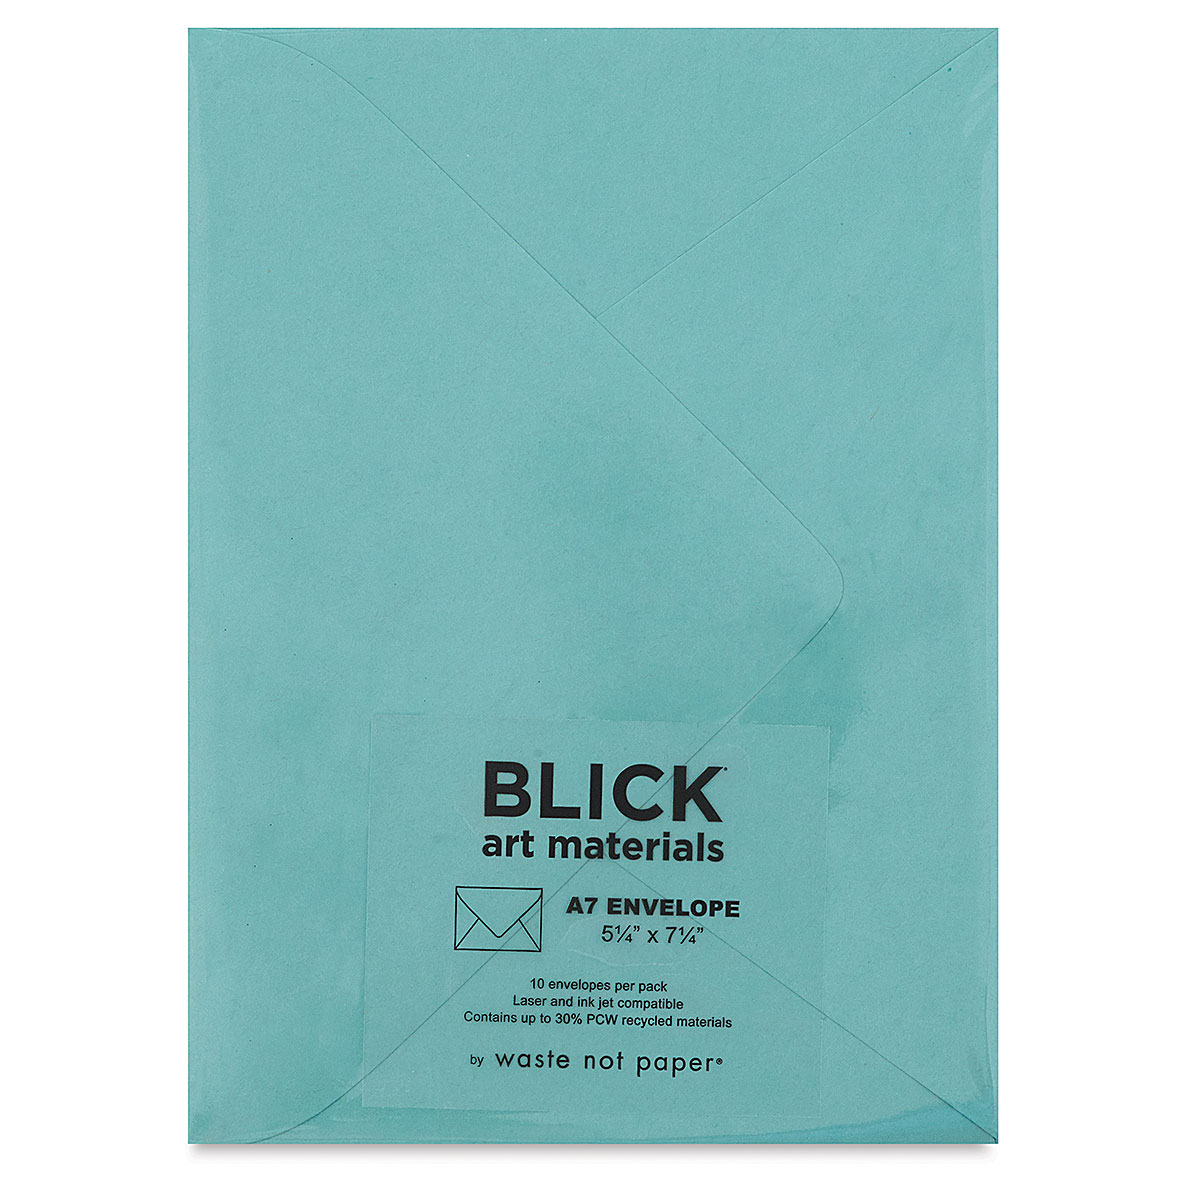 Blick Art Materials (@Blick_Art) / X